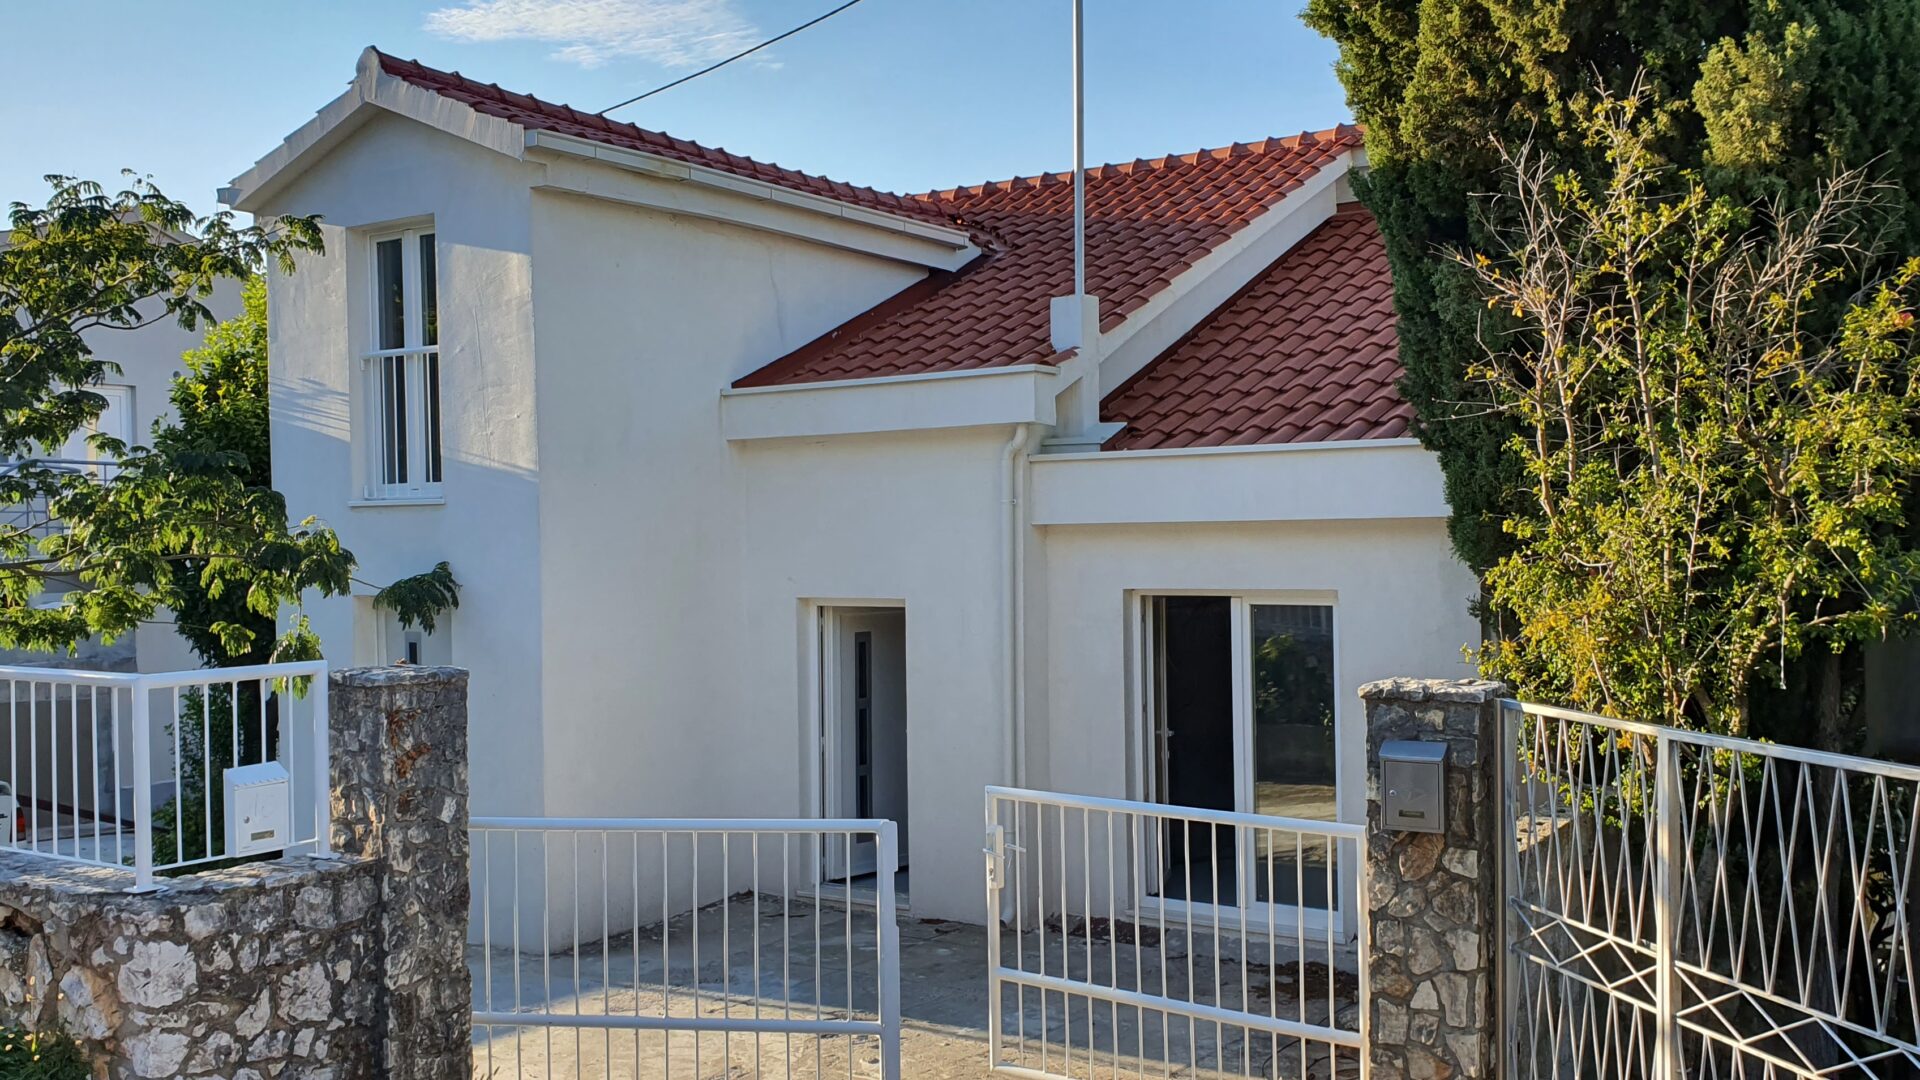 Unfinished house in Dalmatia